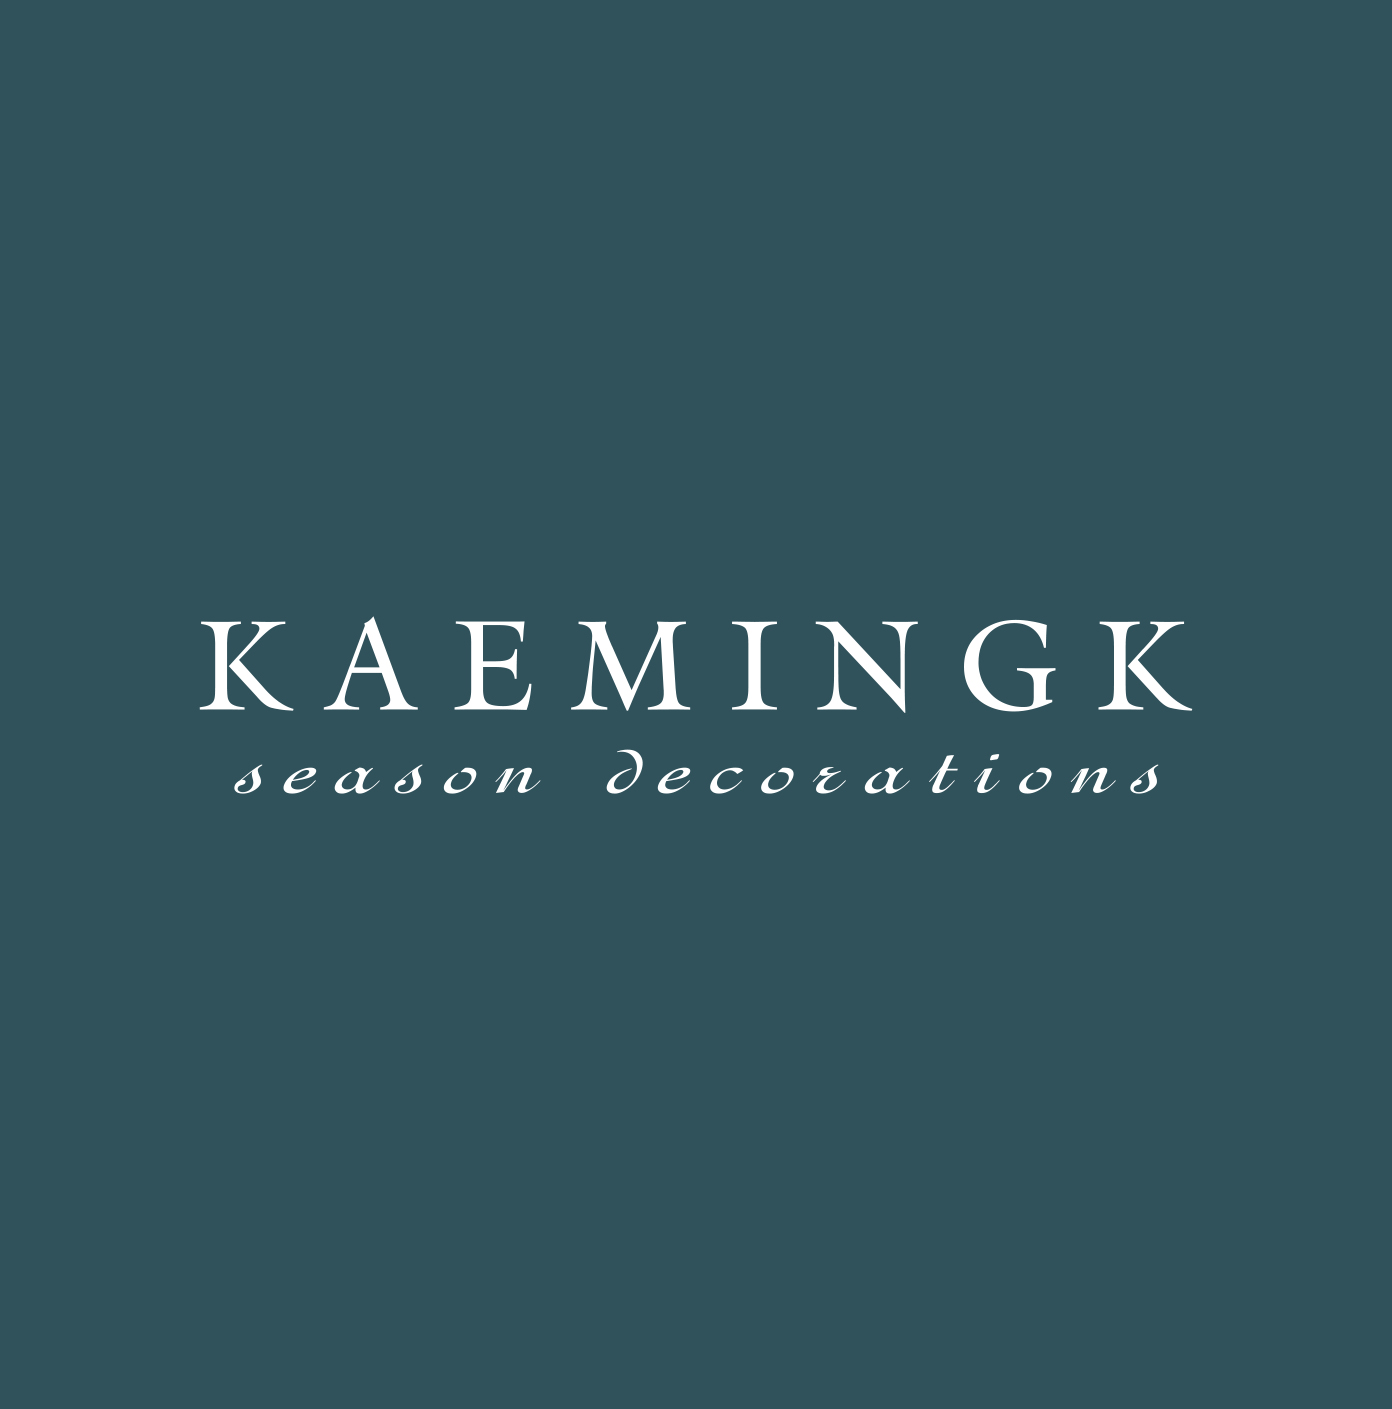 Kaemingk logo